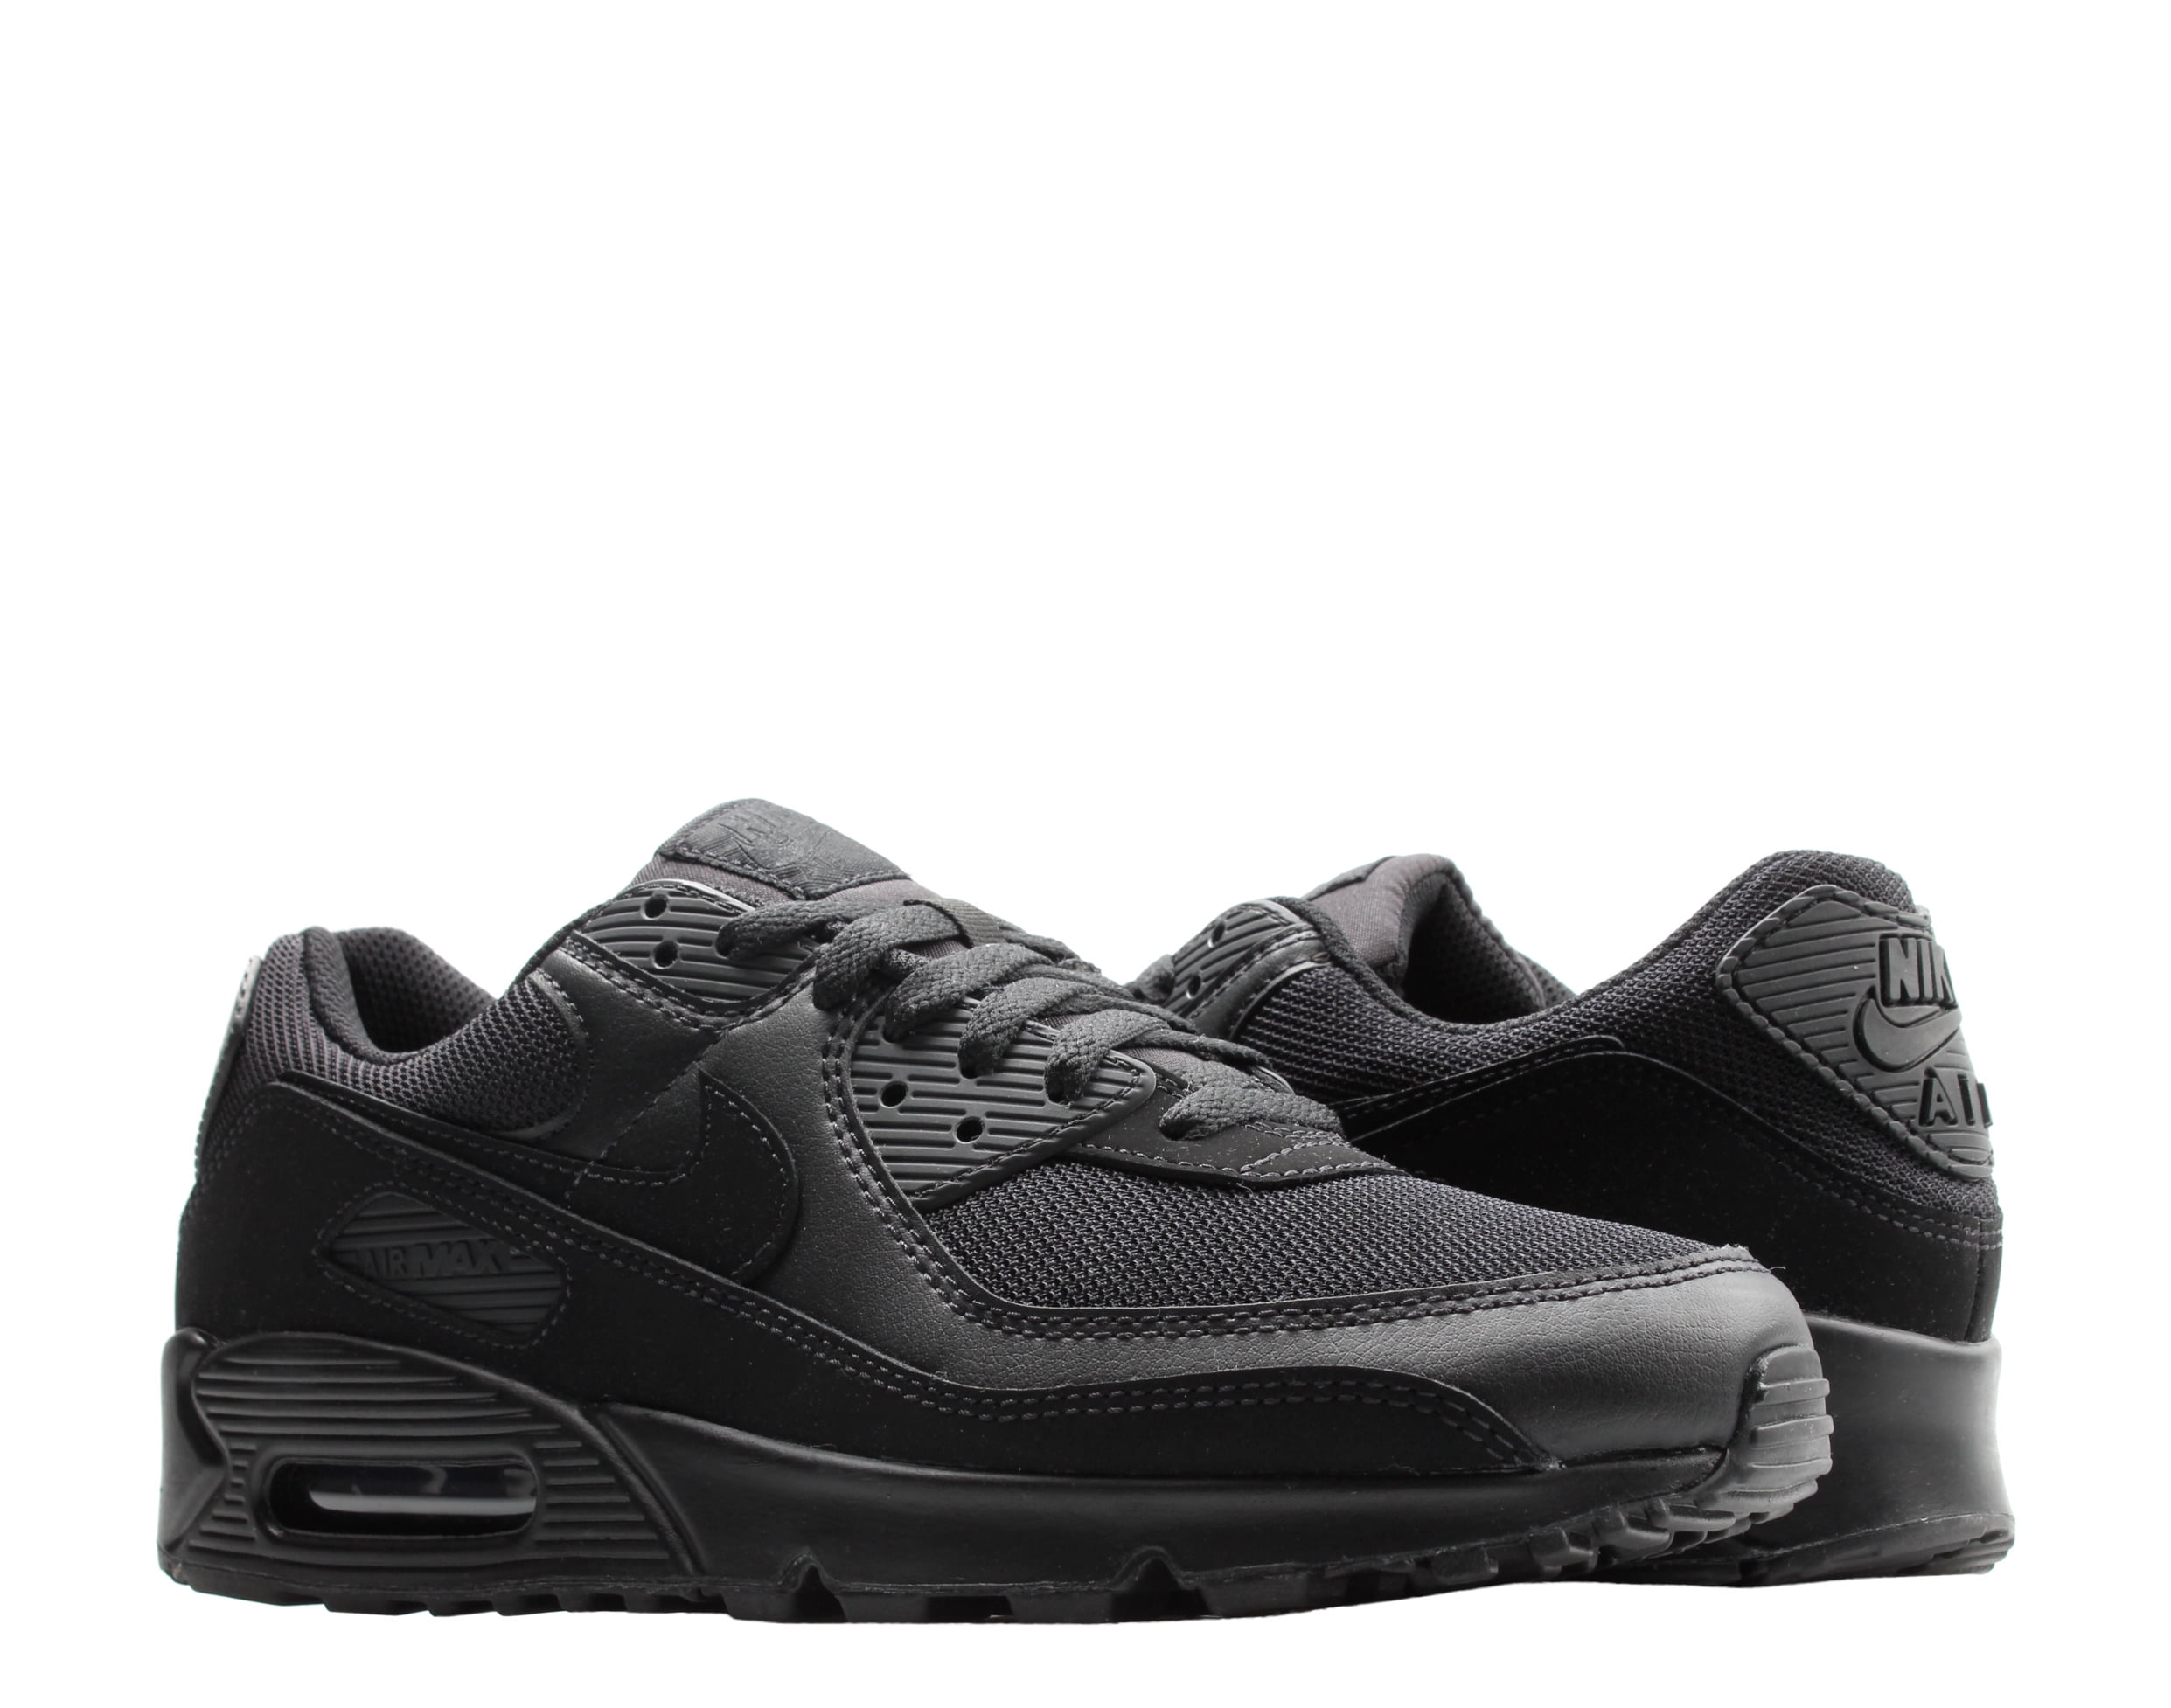 Nike Air Max 90 Black/Black-Black-White Men's Running Shoes CN8490-003 Walmart.com